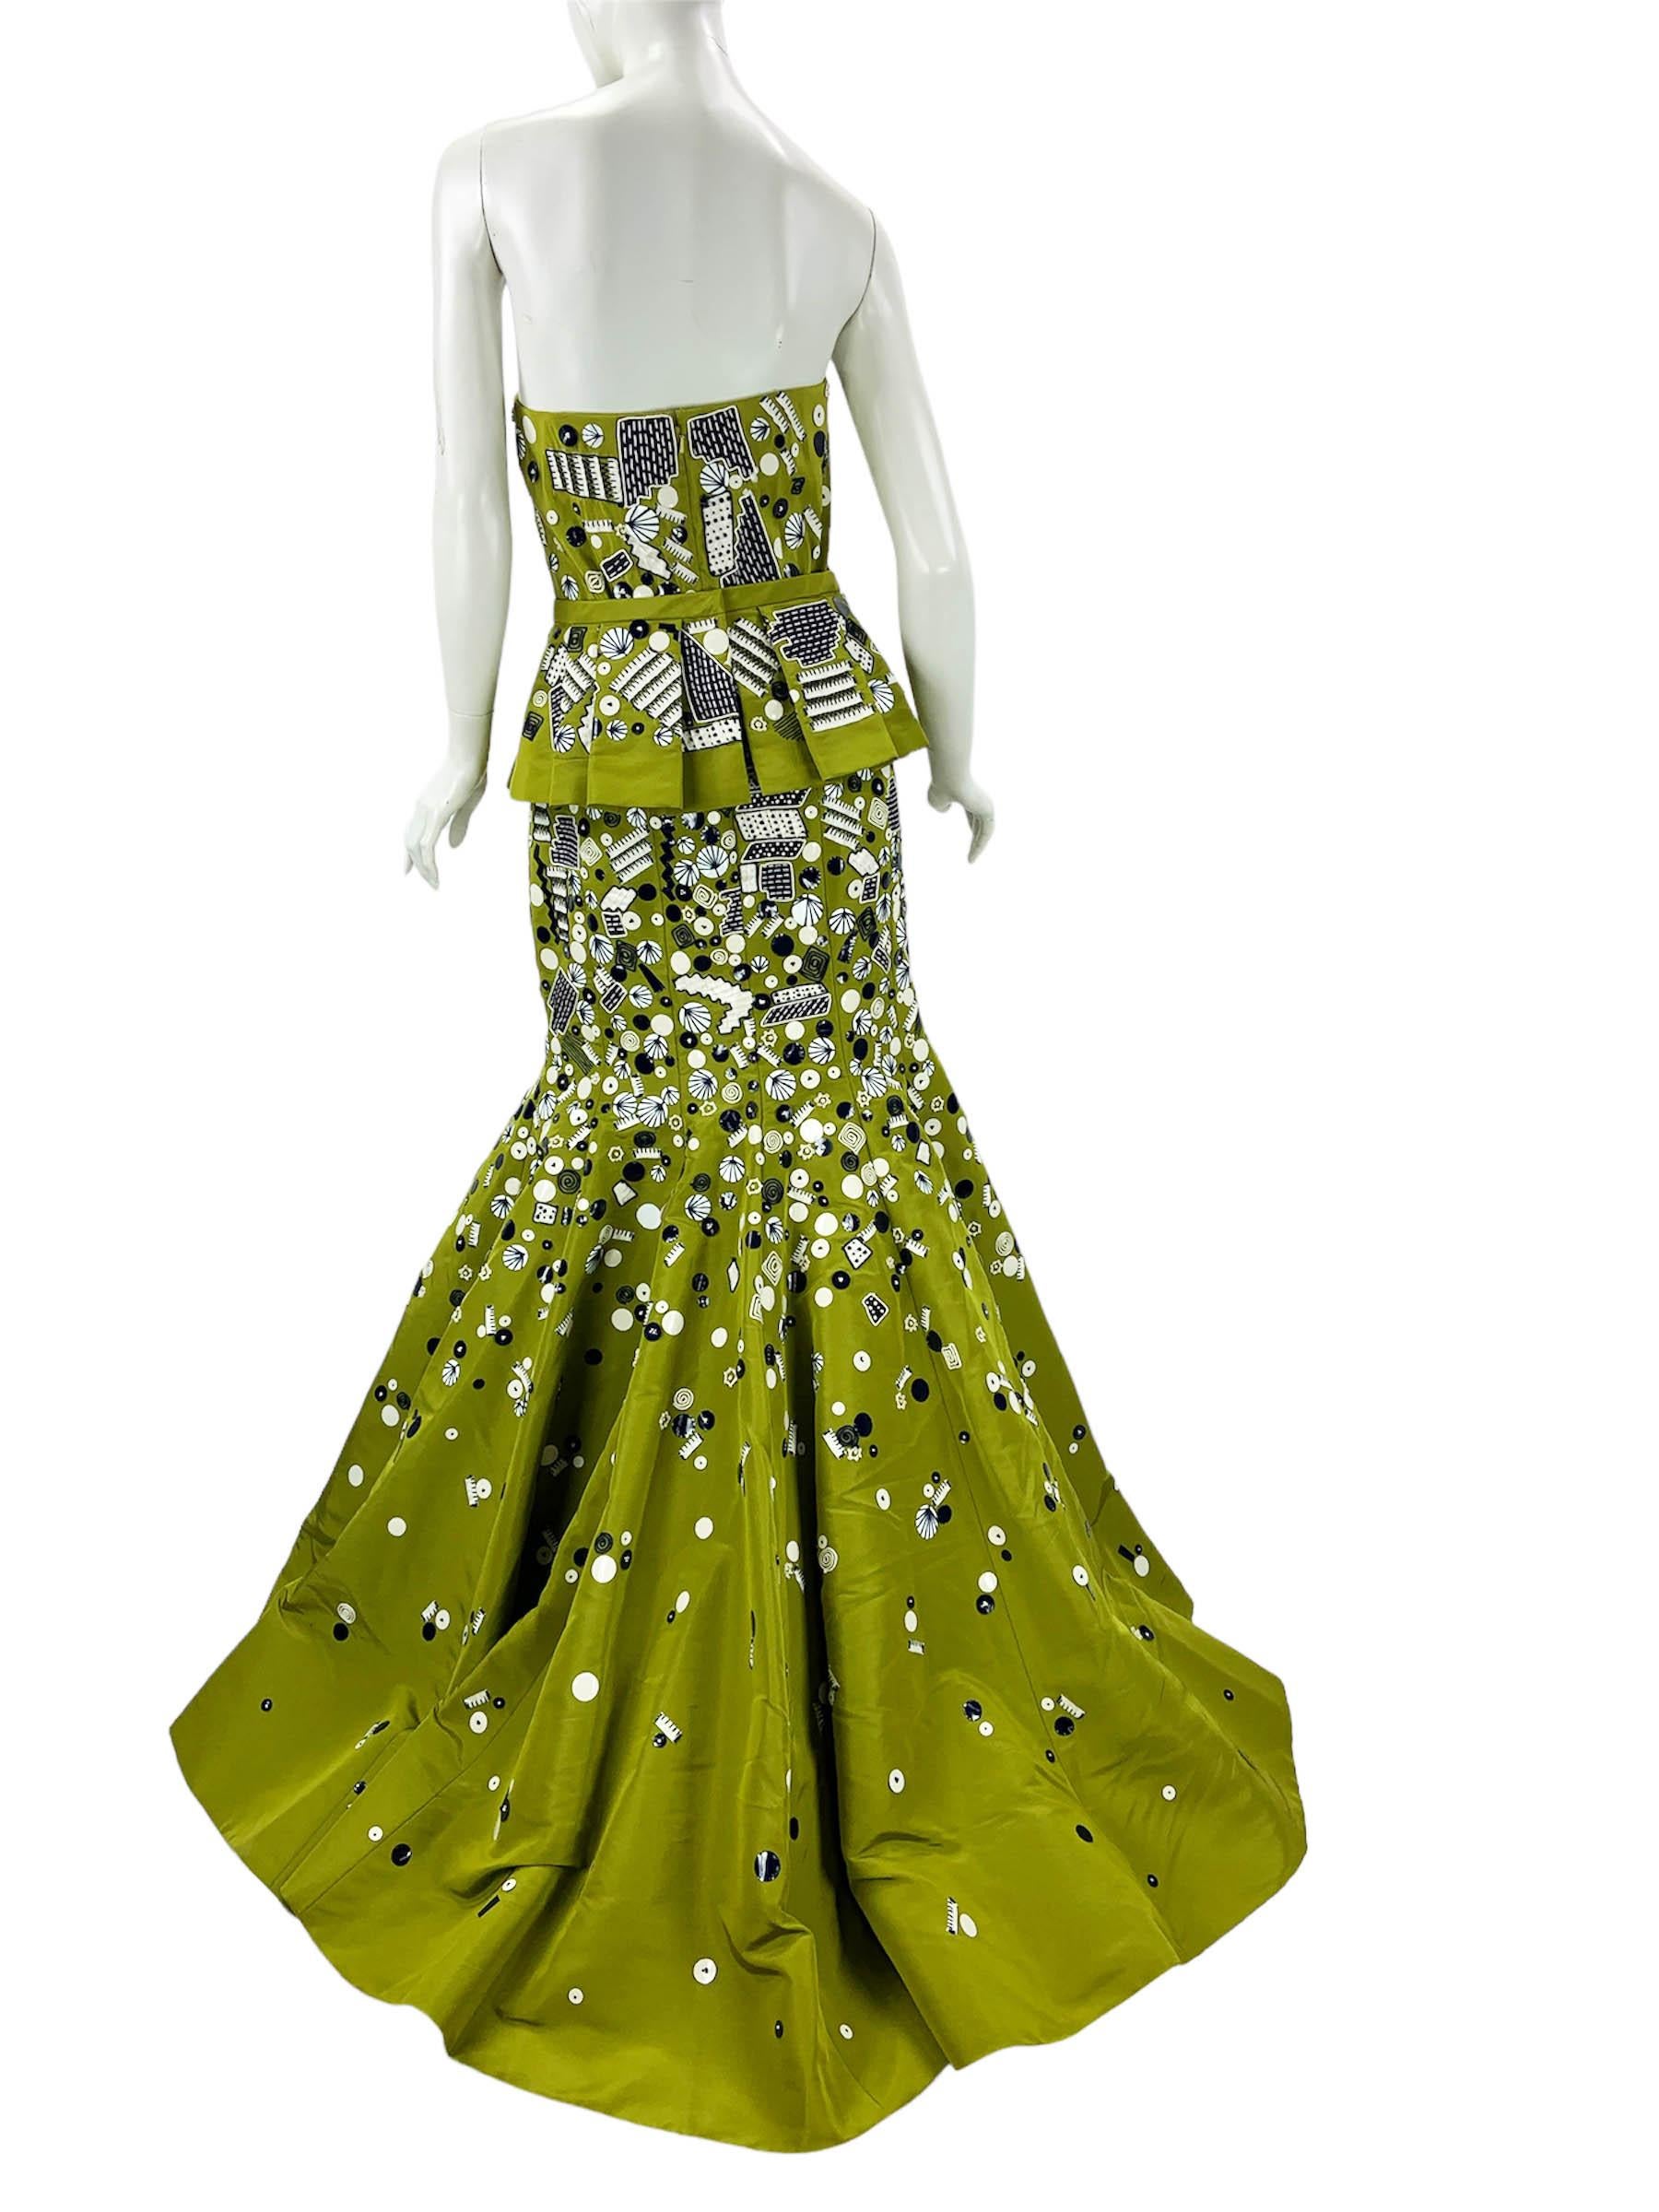 Women's NWT Oscar de la Renta S/S 2009 Green Embellished Silk Taffeta Peplum Dress US 10 For Sale